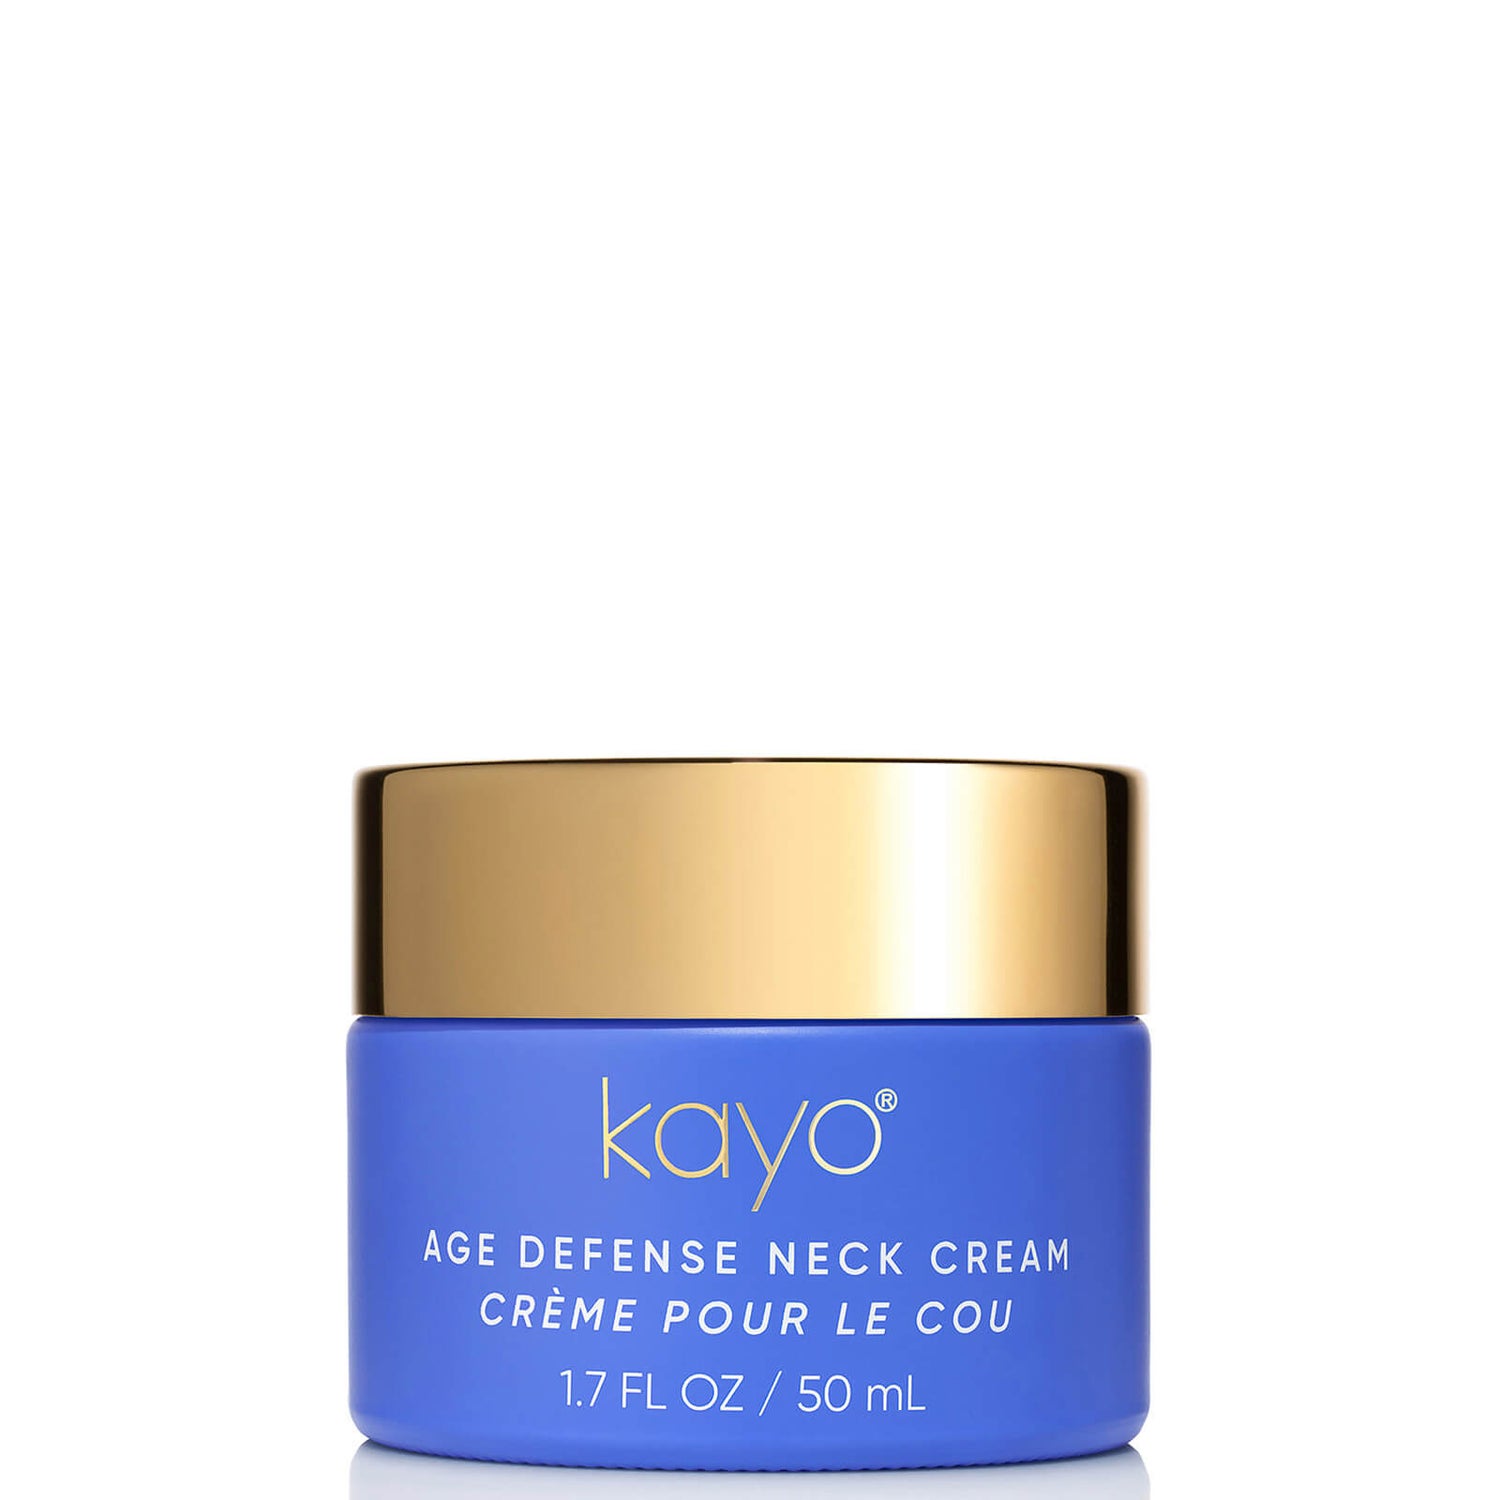 Kayo Body Care Age Defense Neck Cream 1.7 fl. oz.